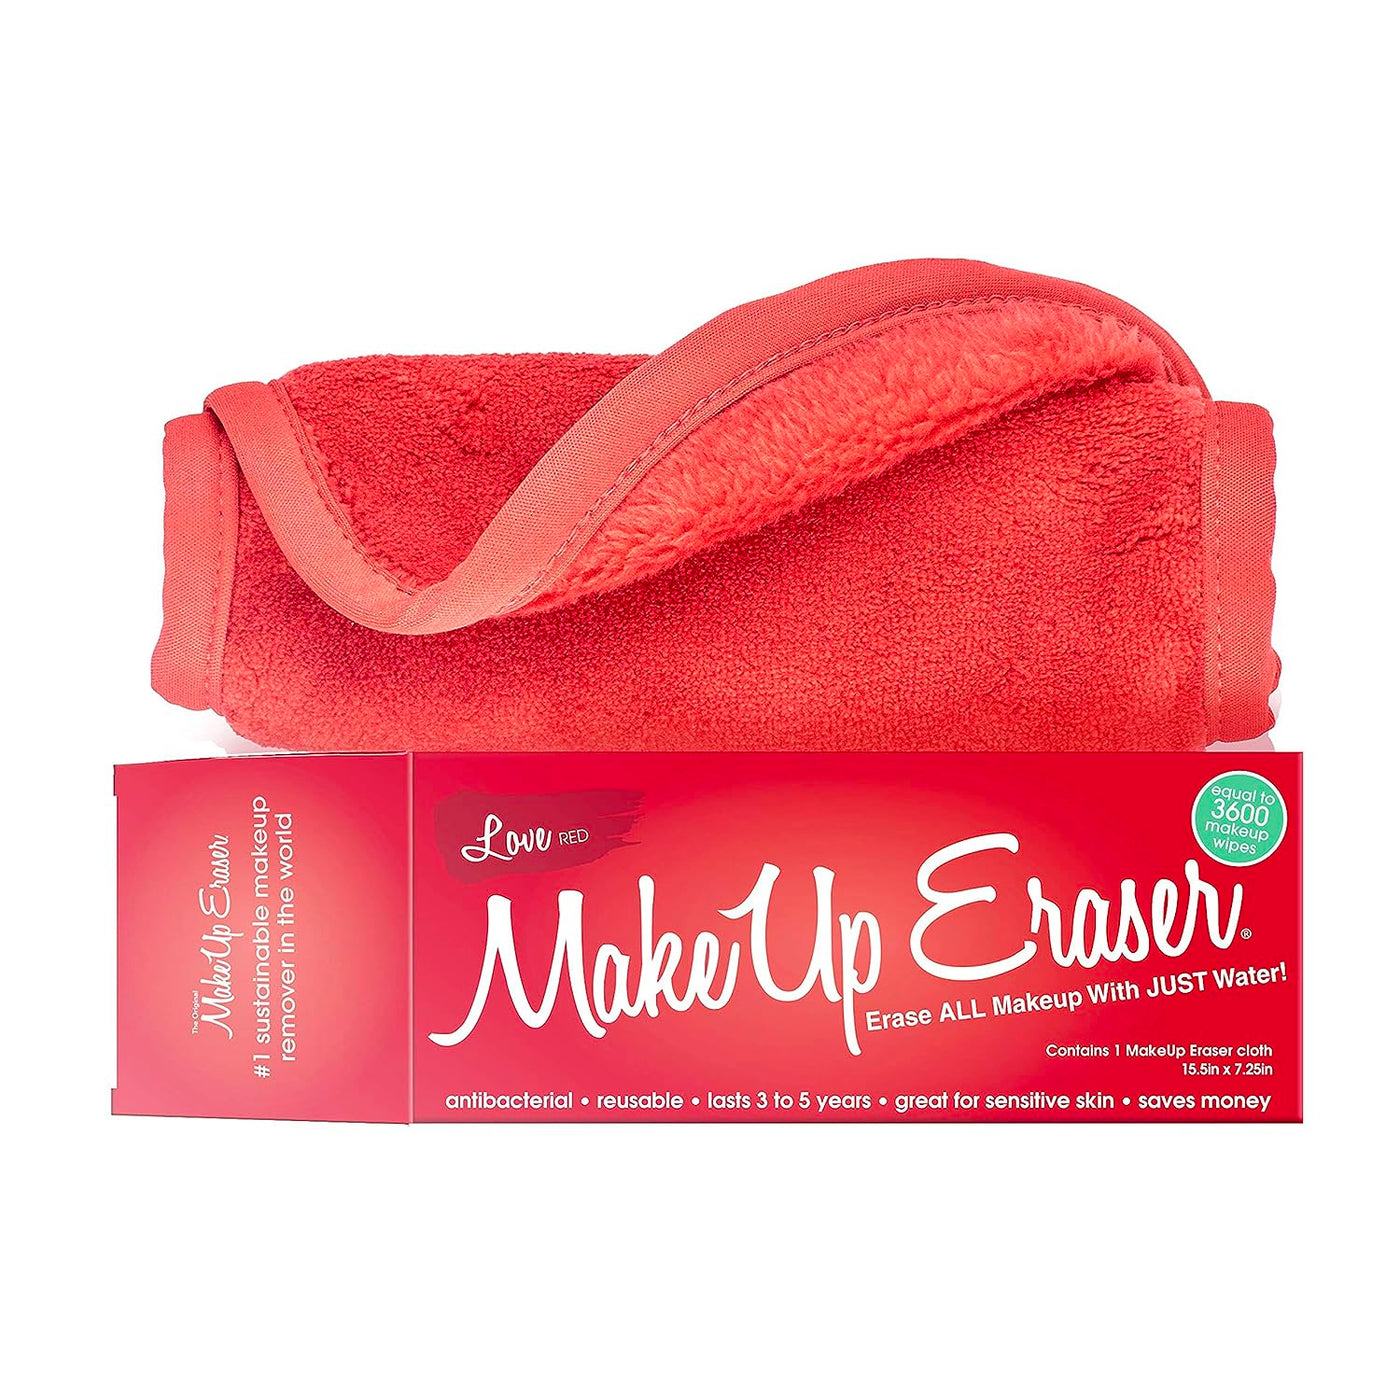 RED - The Original MakeUp Eraser® Makeup Remover Cloth